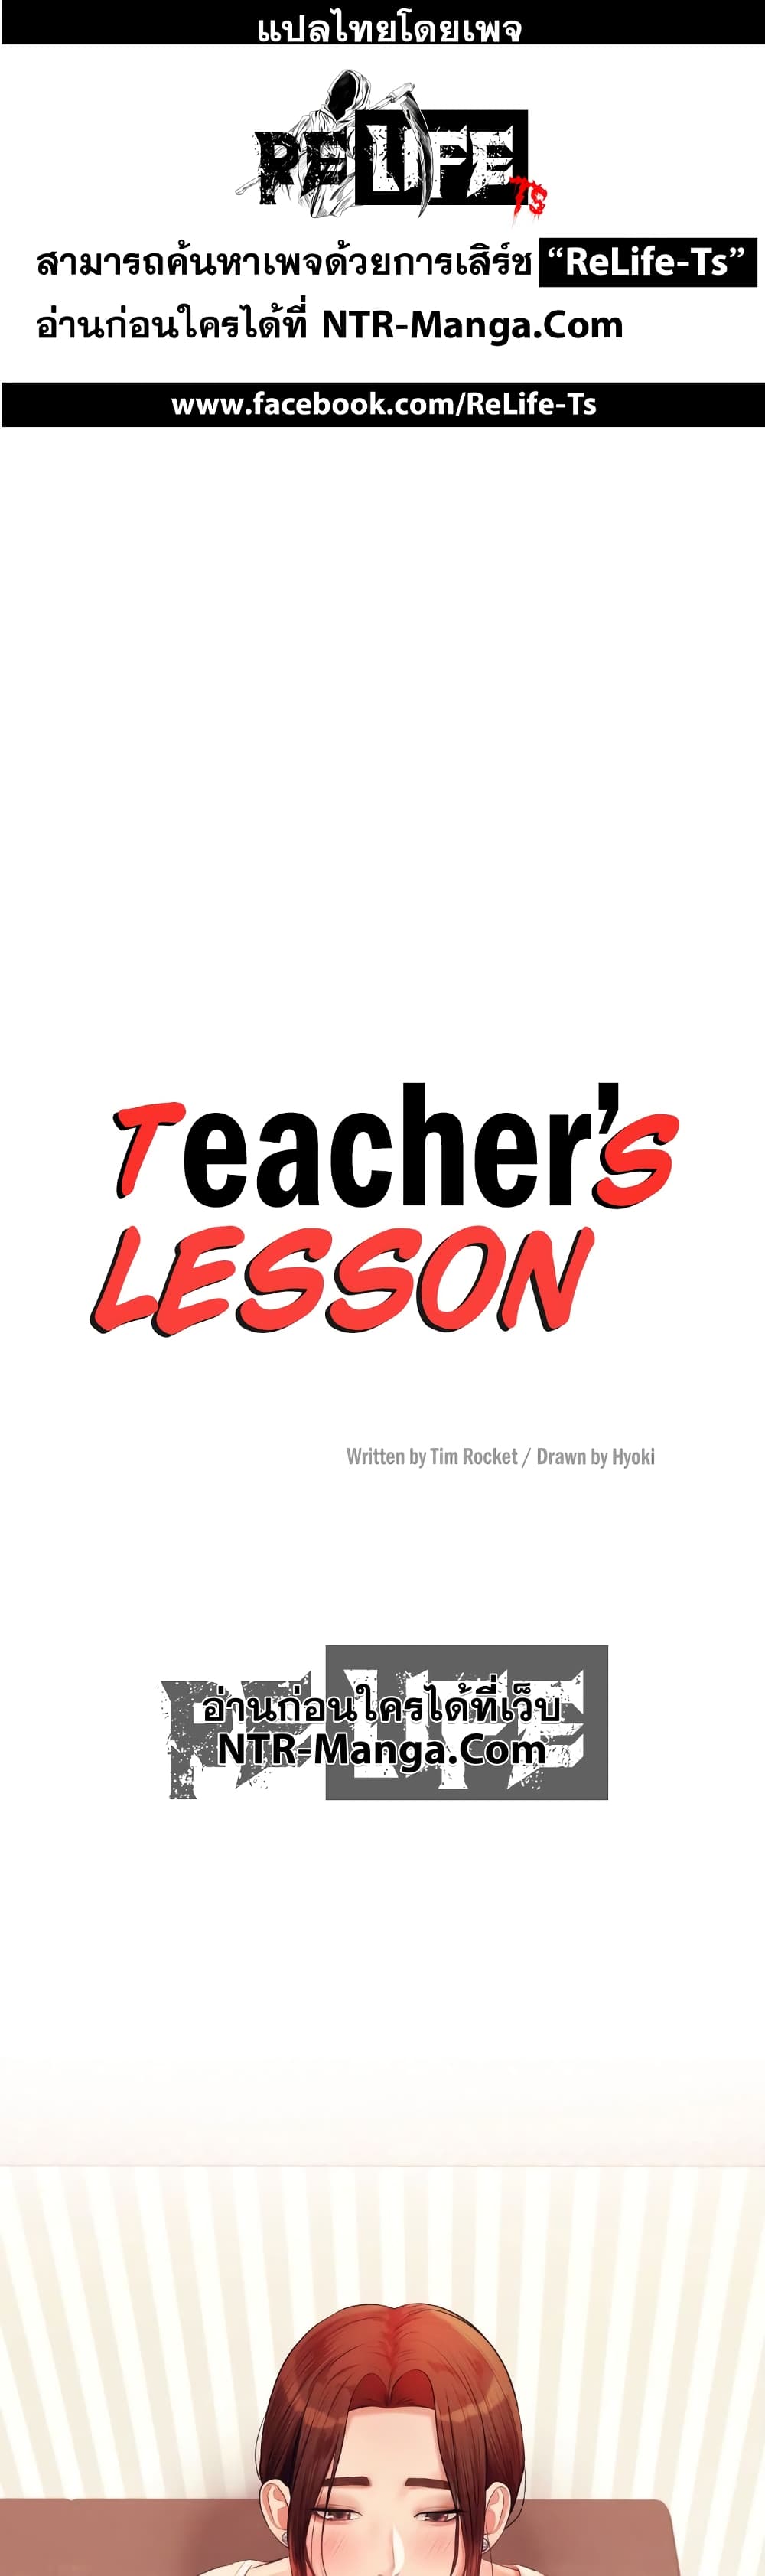 Teacher Lesson 13 (1)